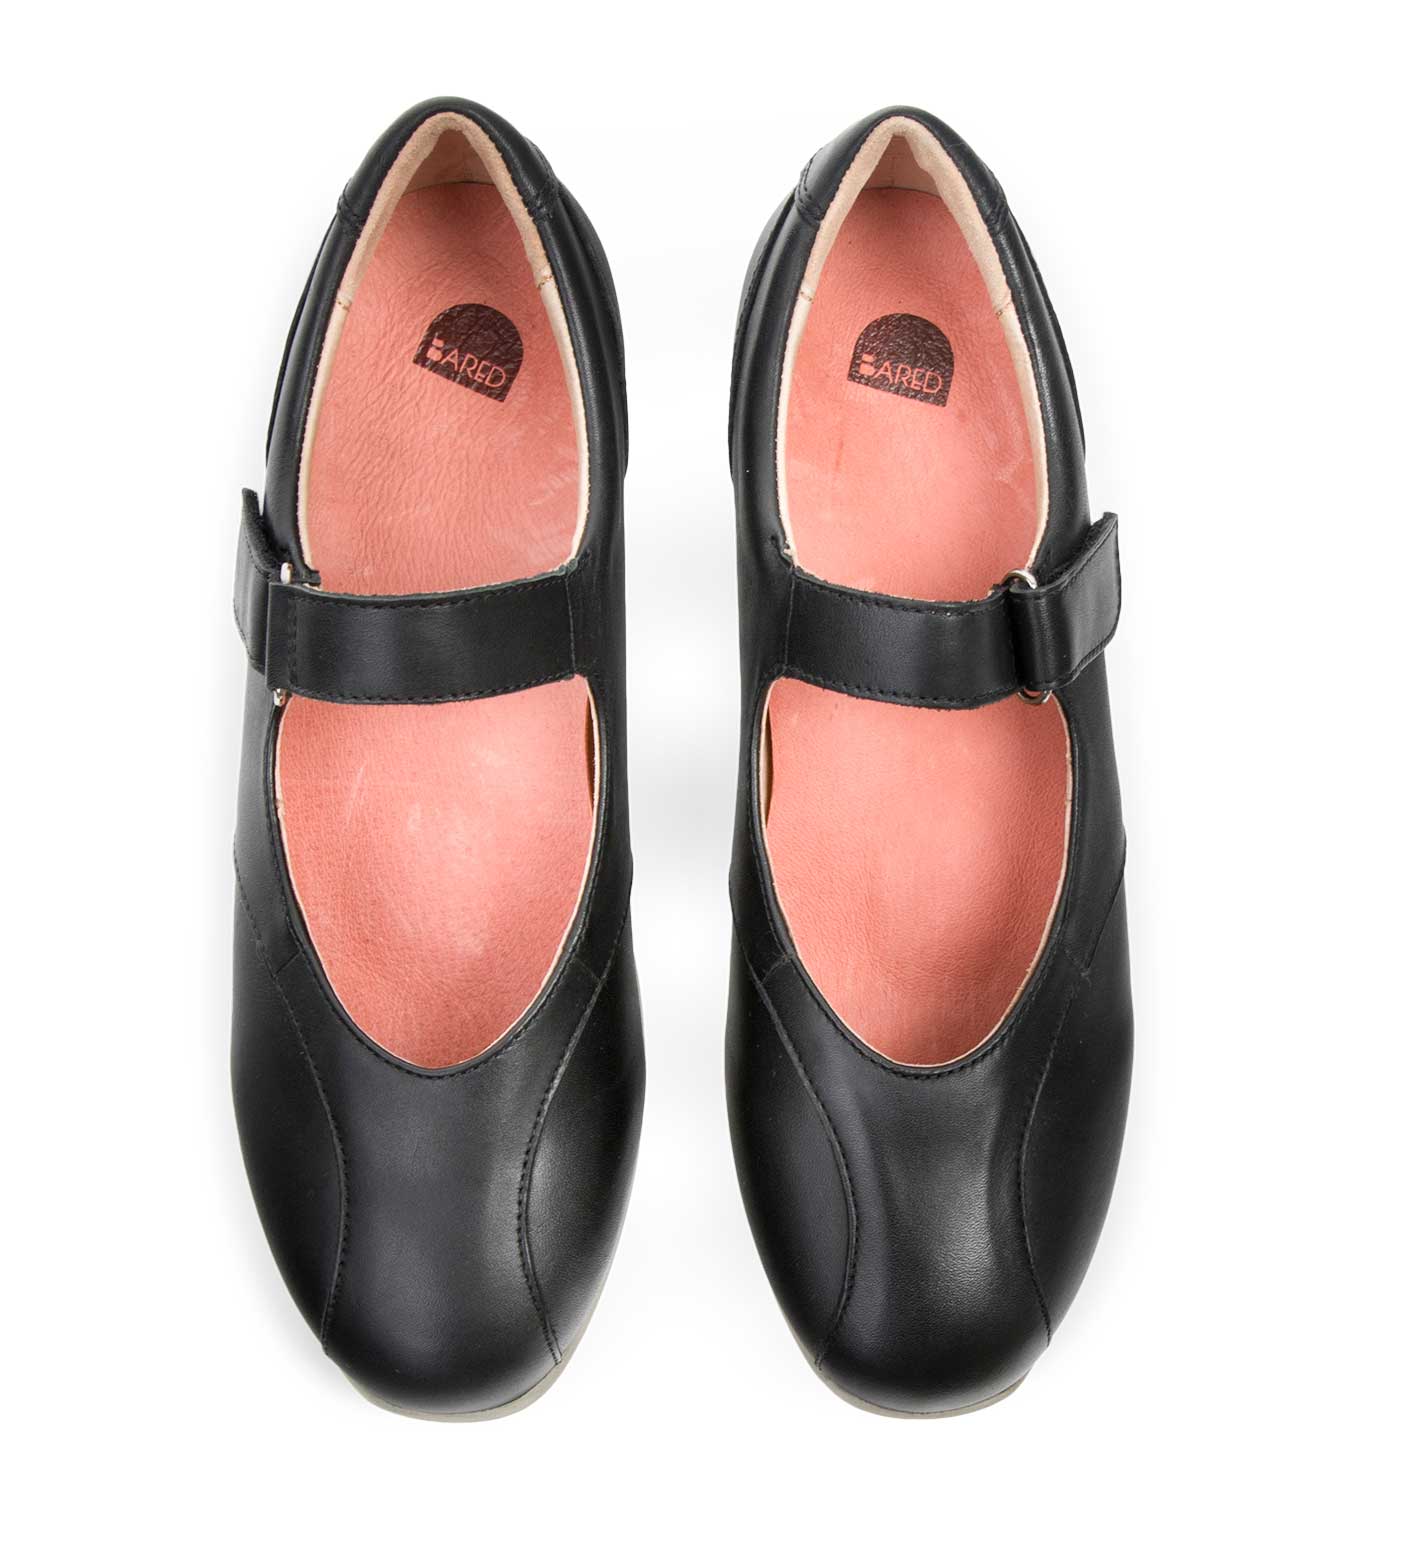 black mary jane shoes australia